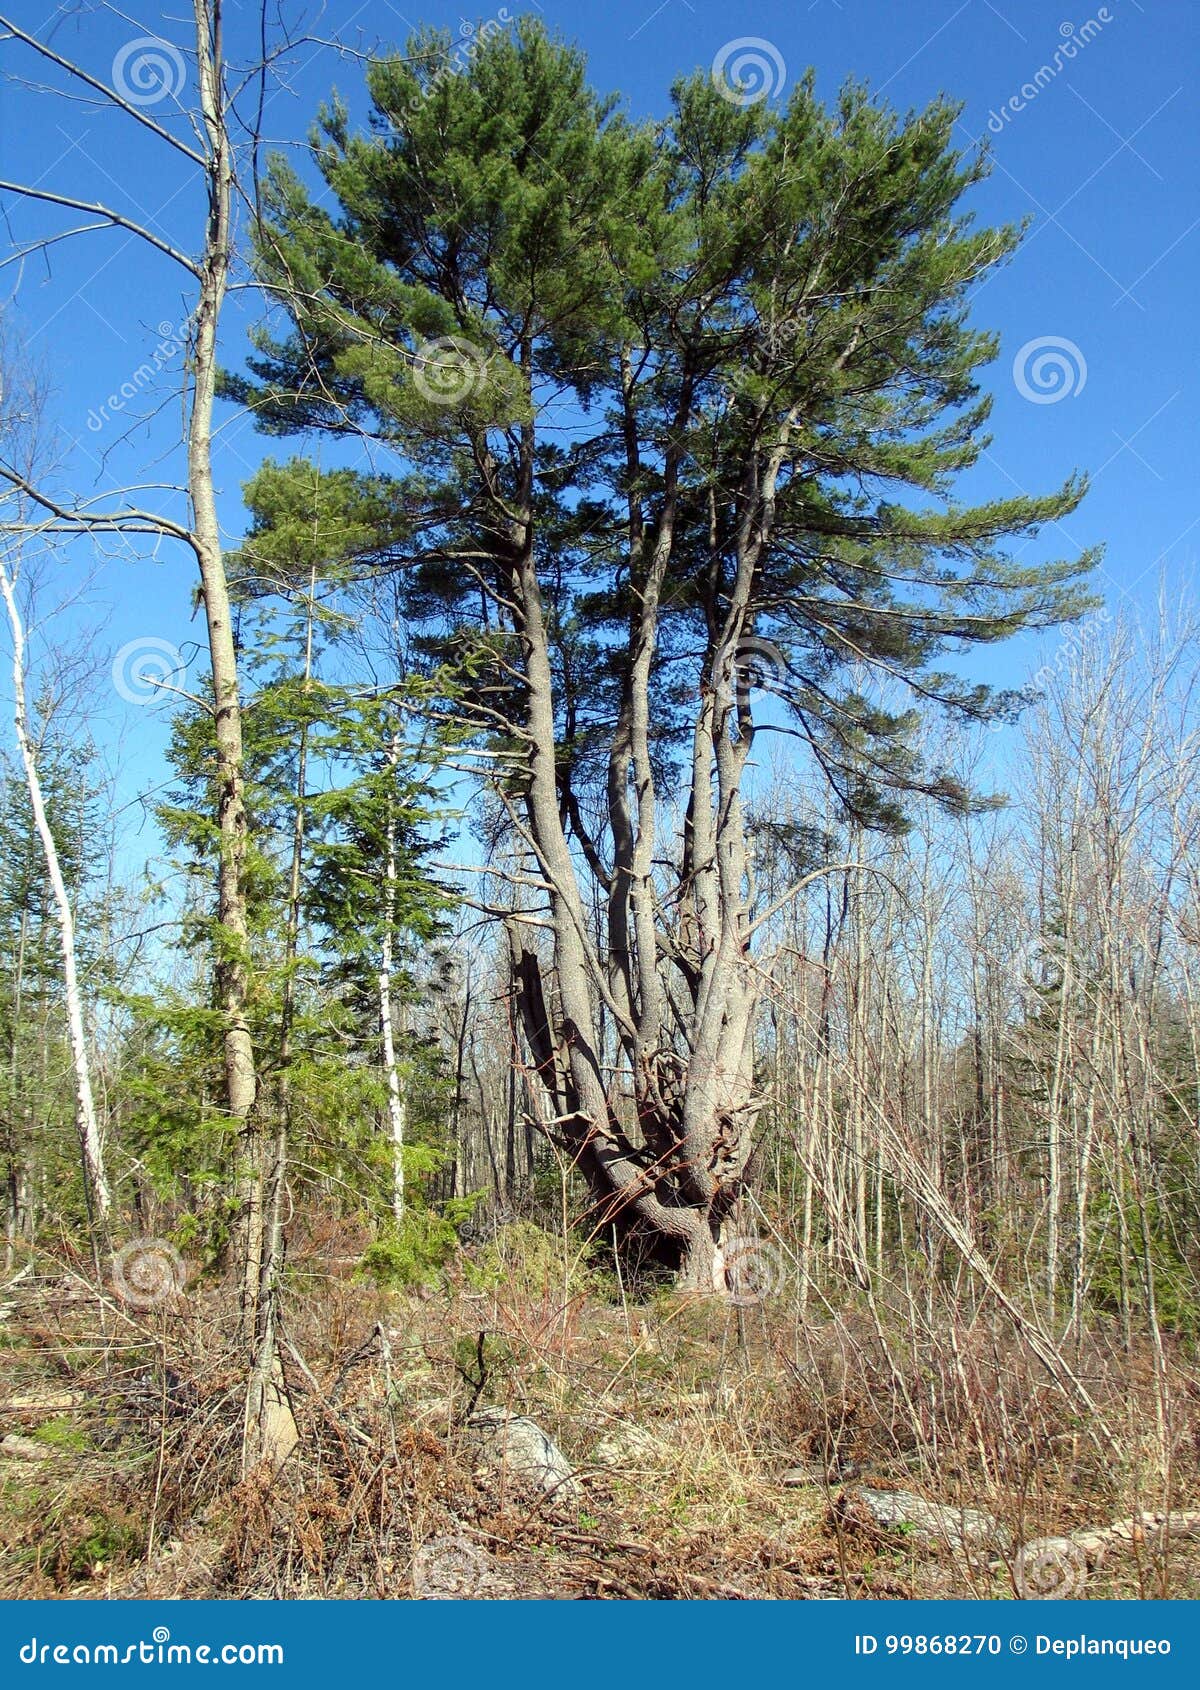 white pine in quebec. canada, north america.